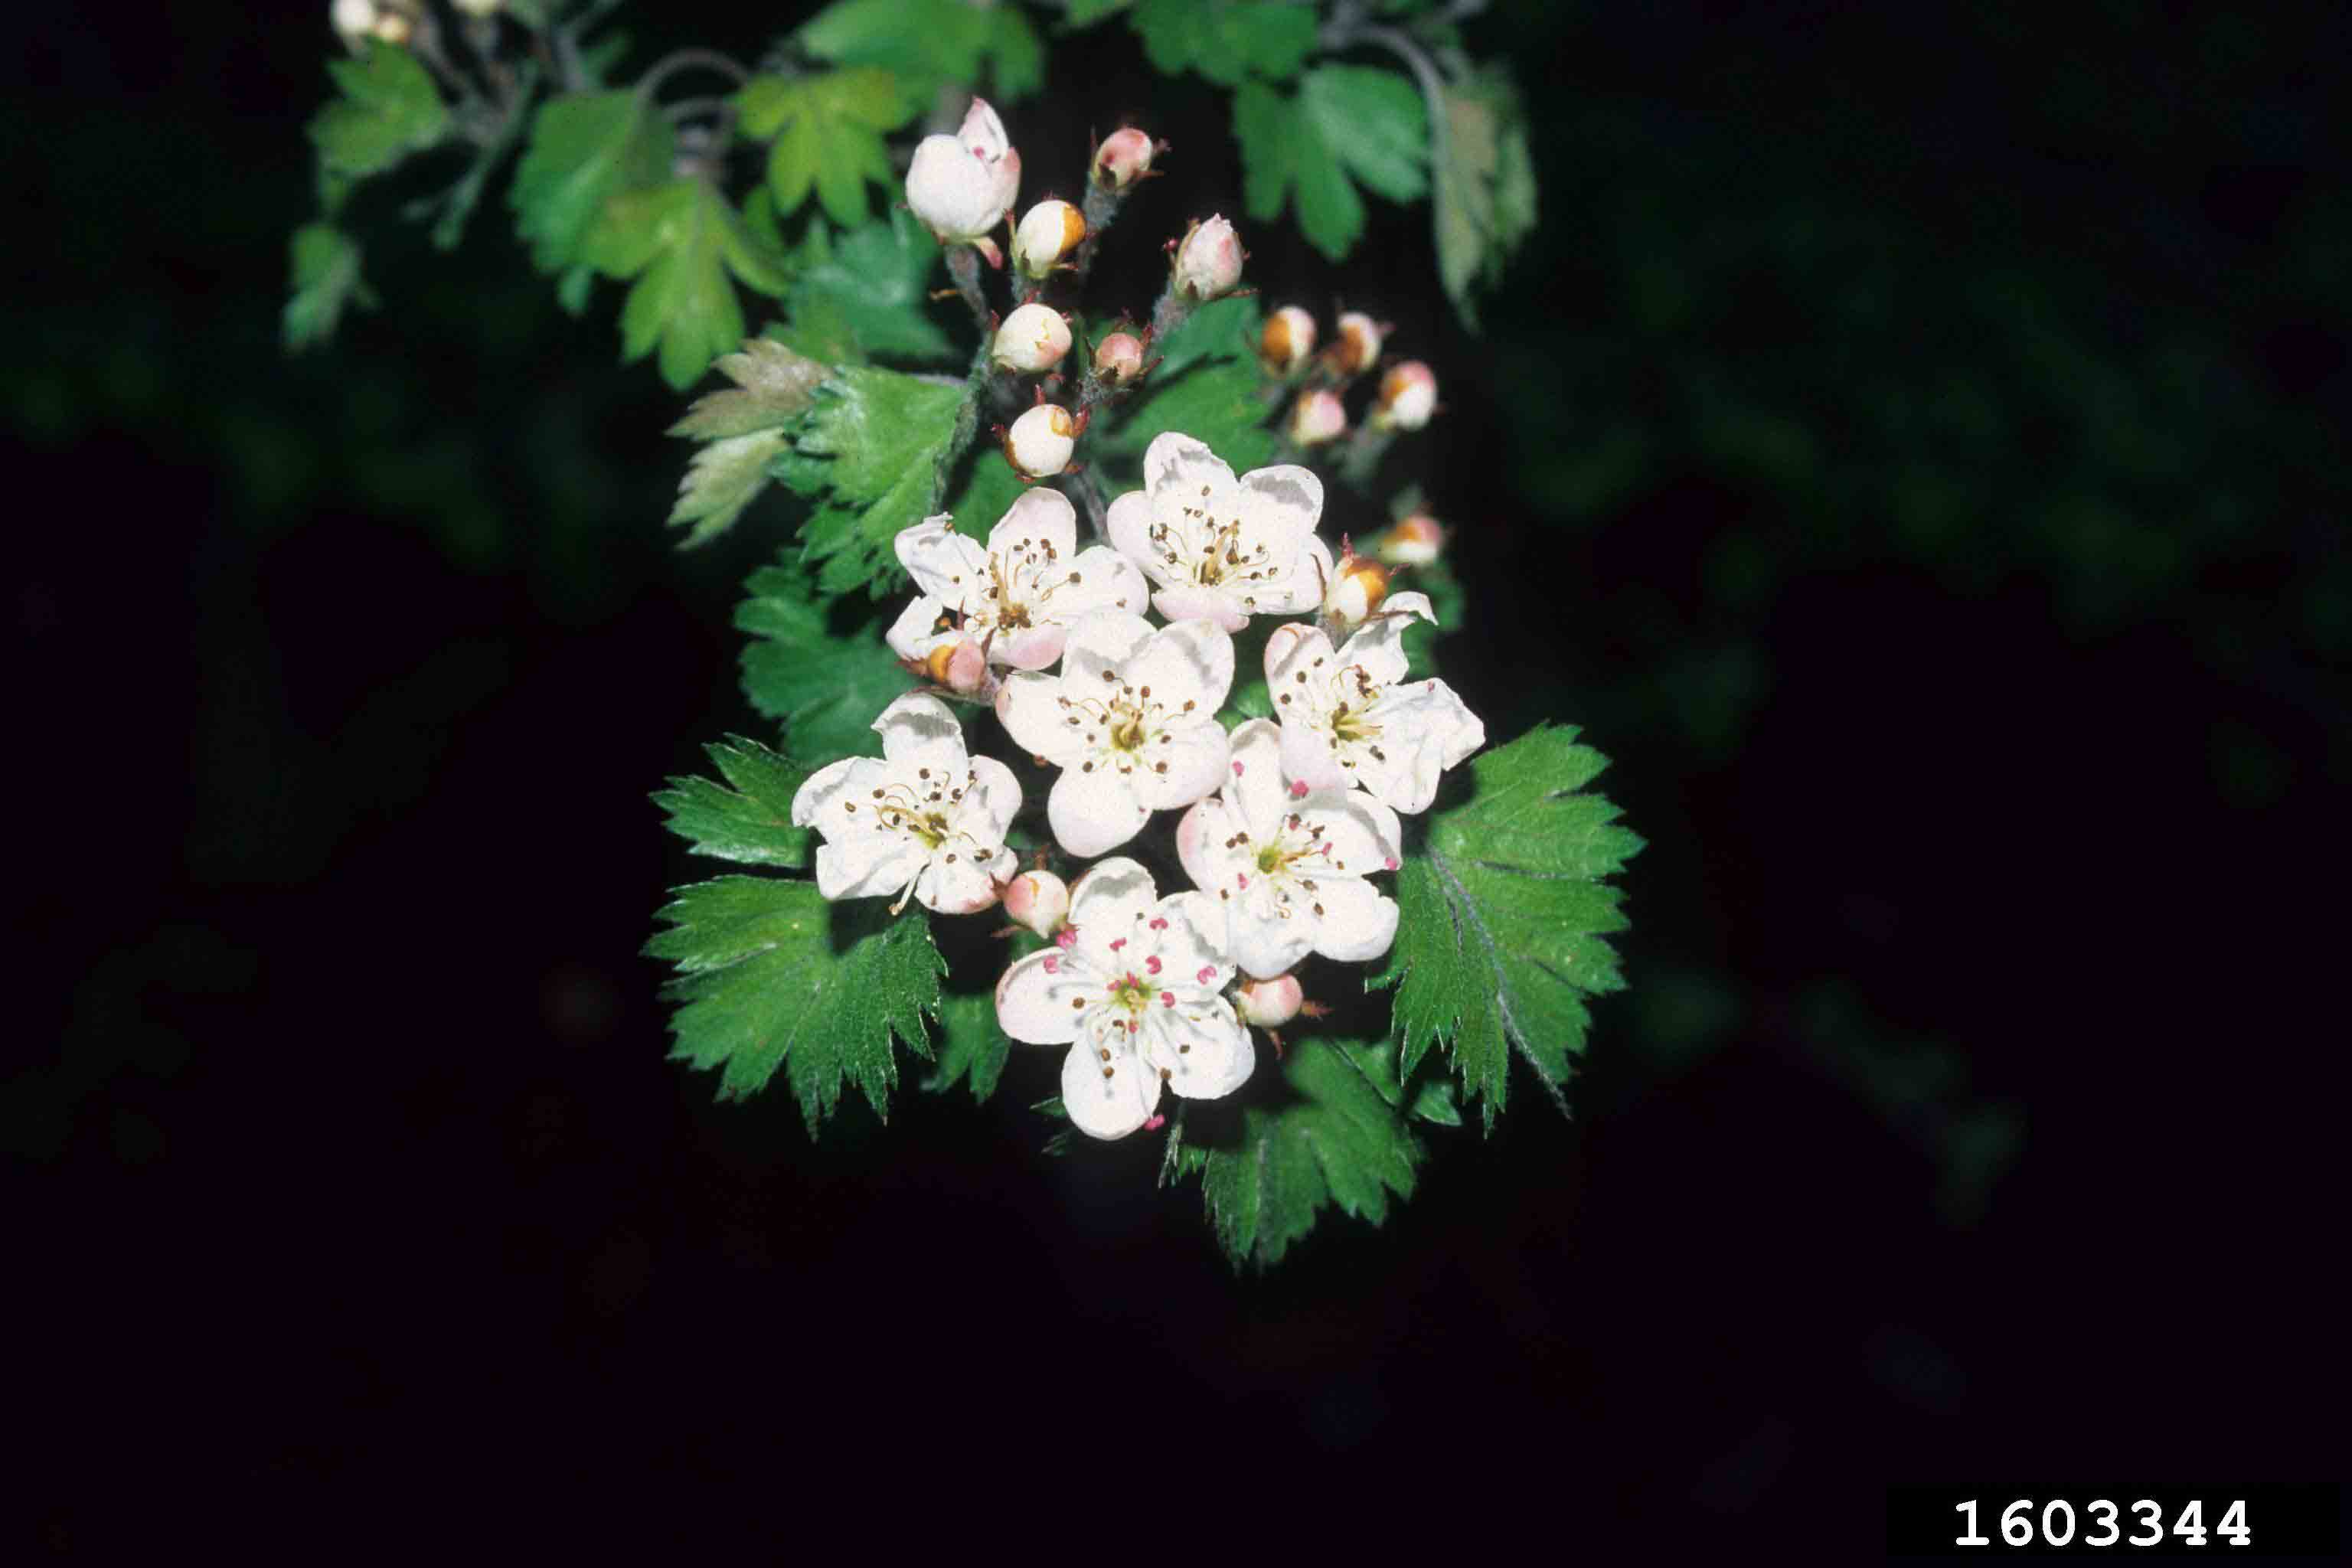 Parsley hawthorn flowers